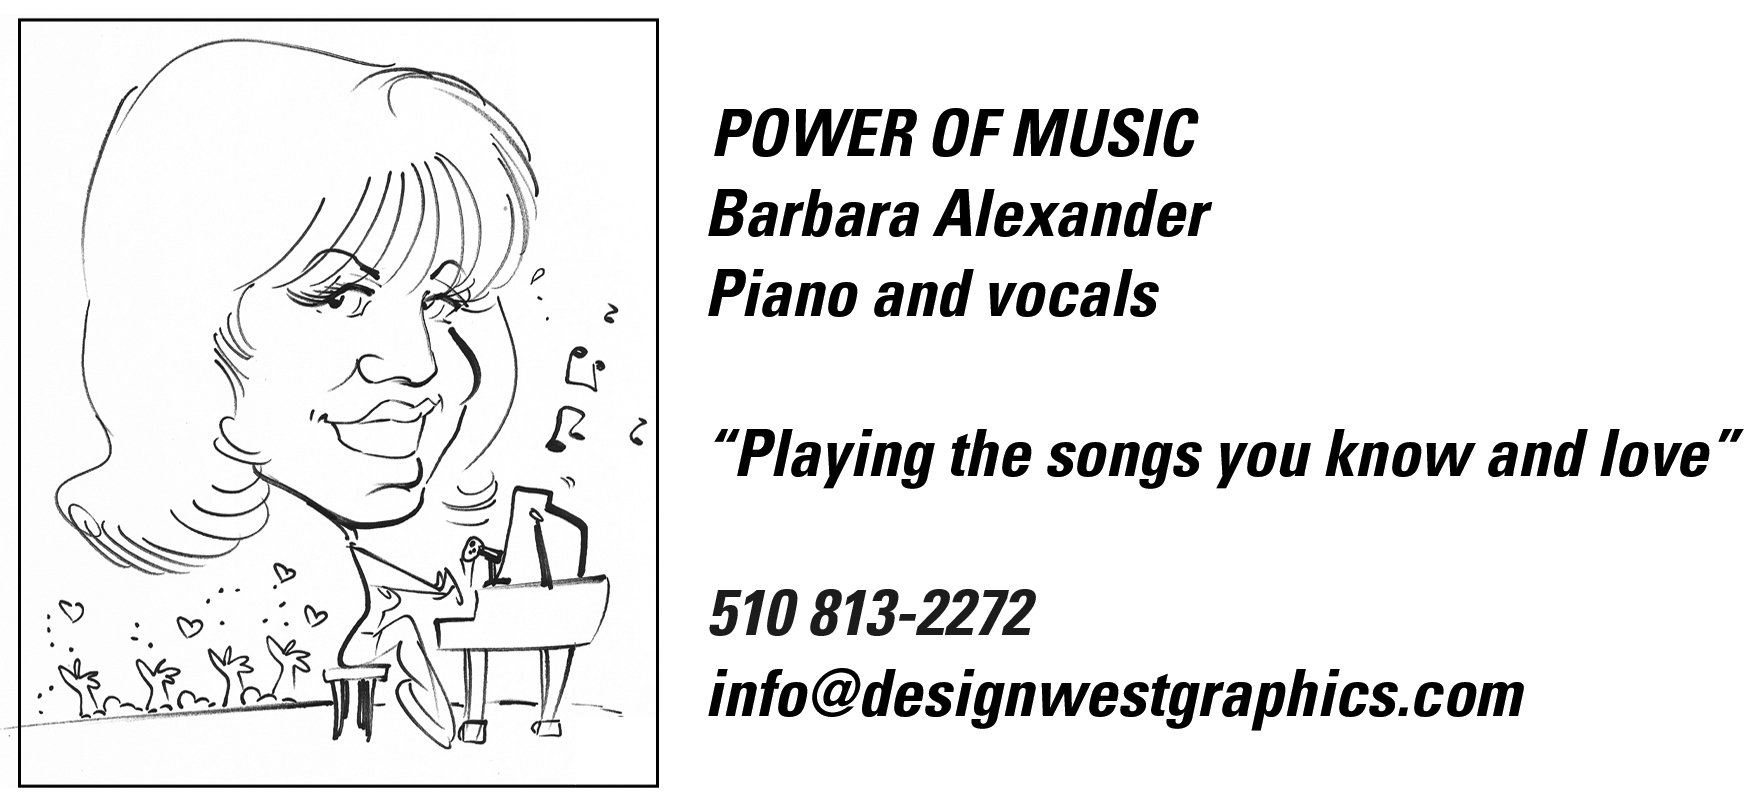 Barbara Alexander Healing Power of Music